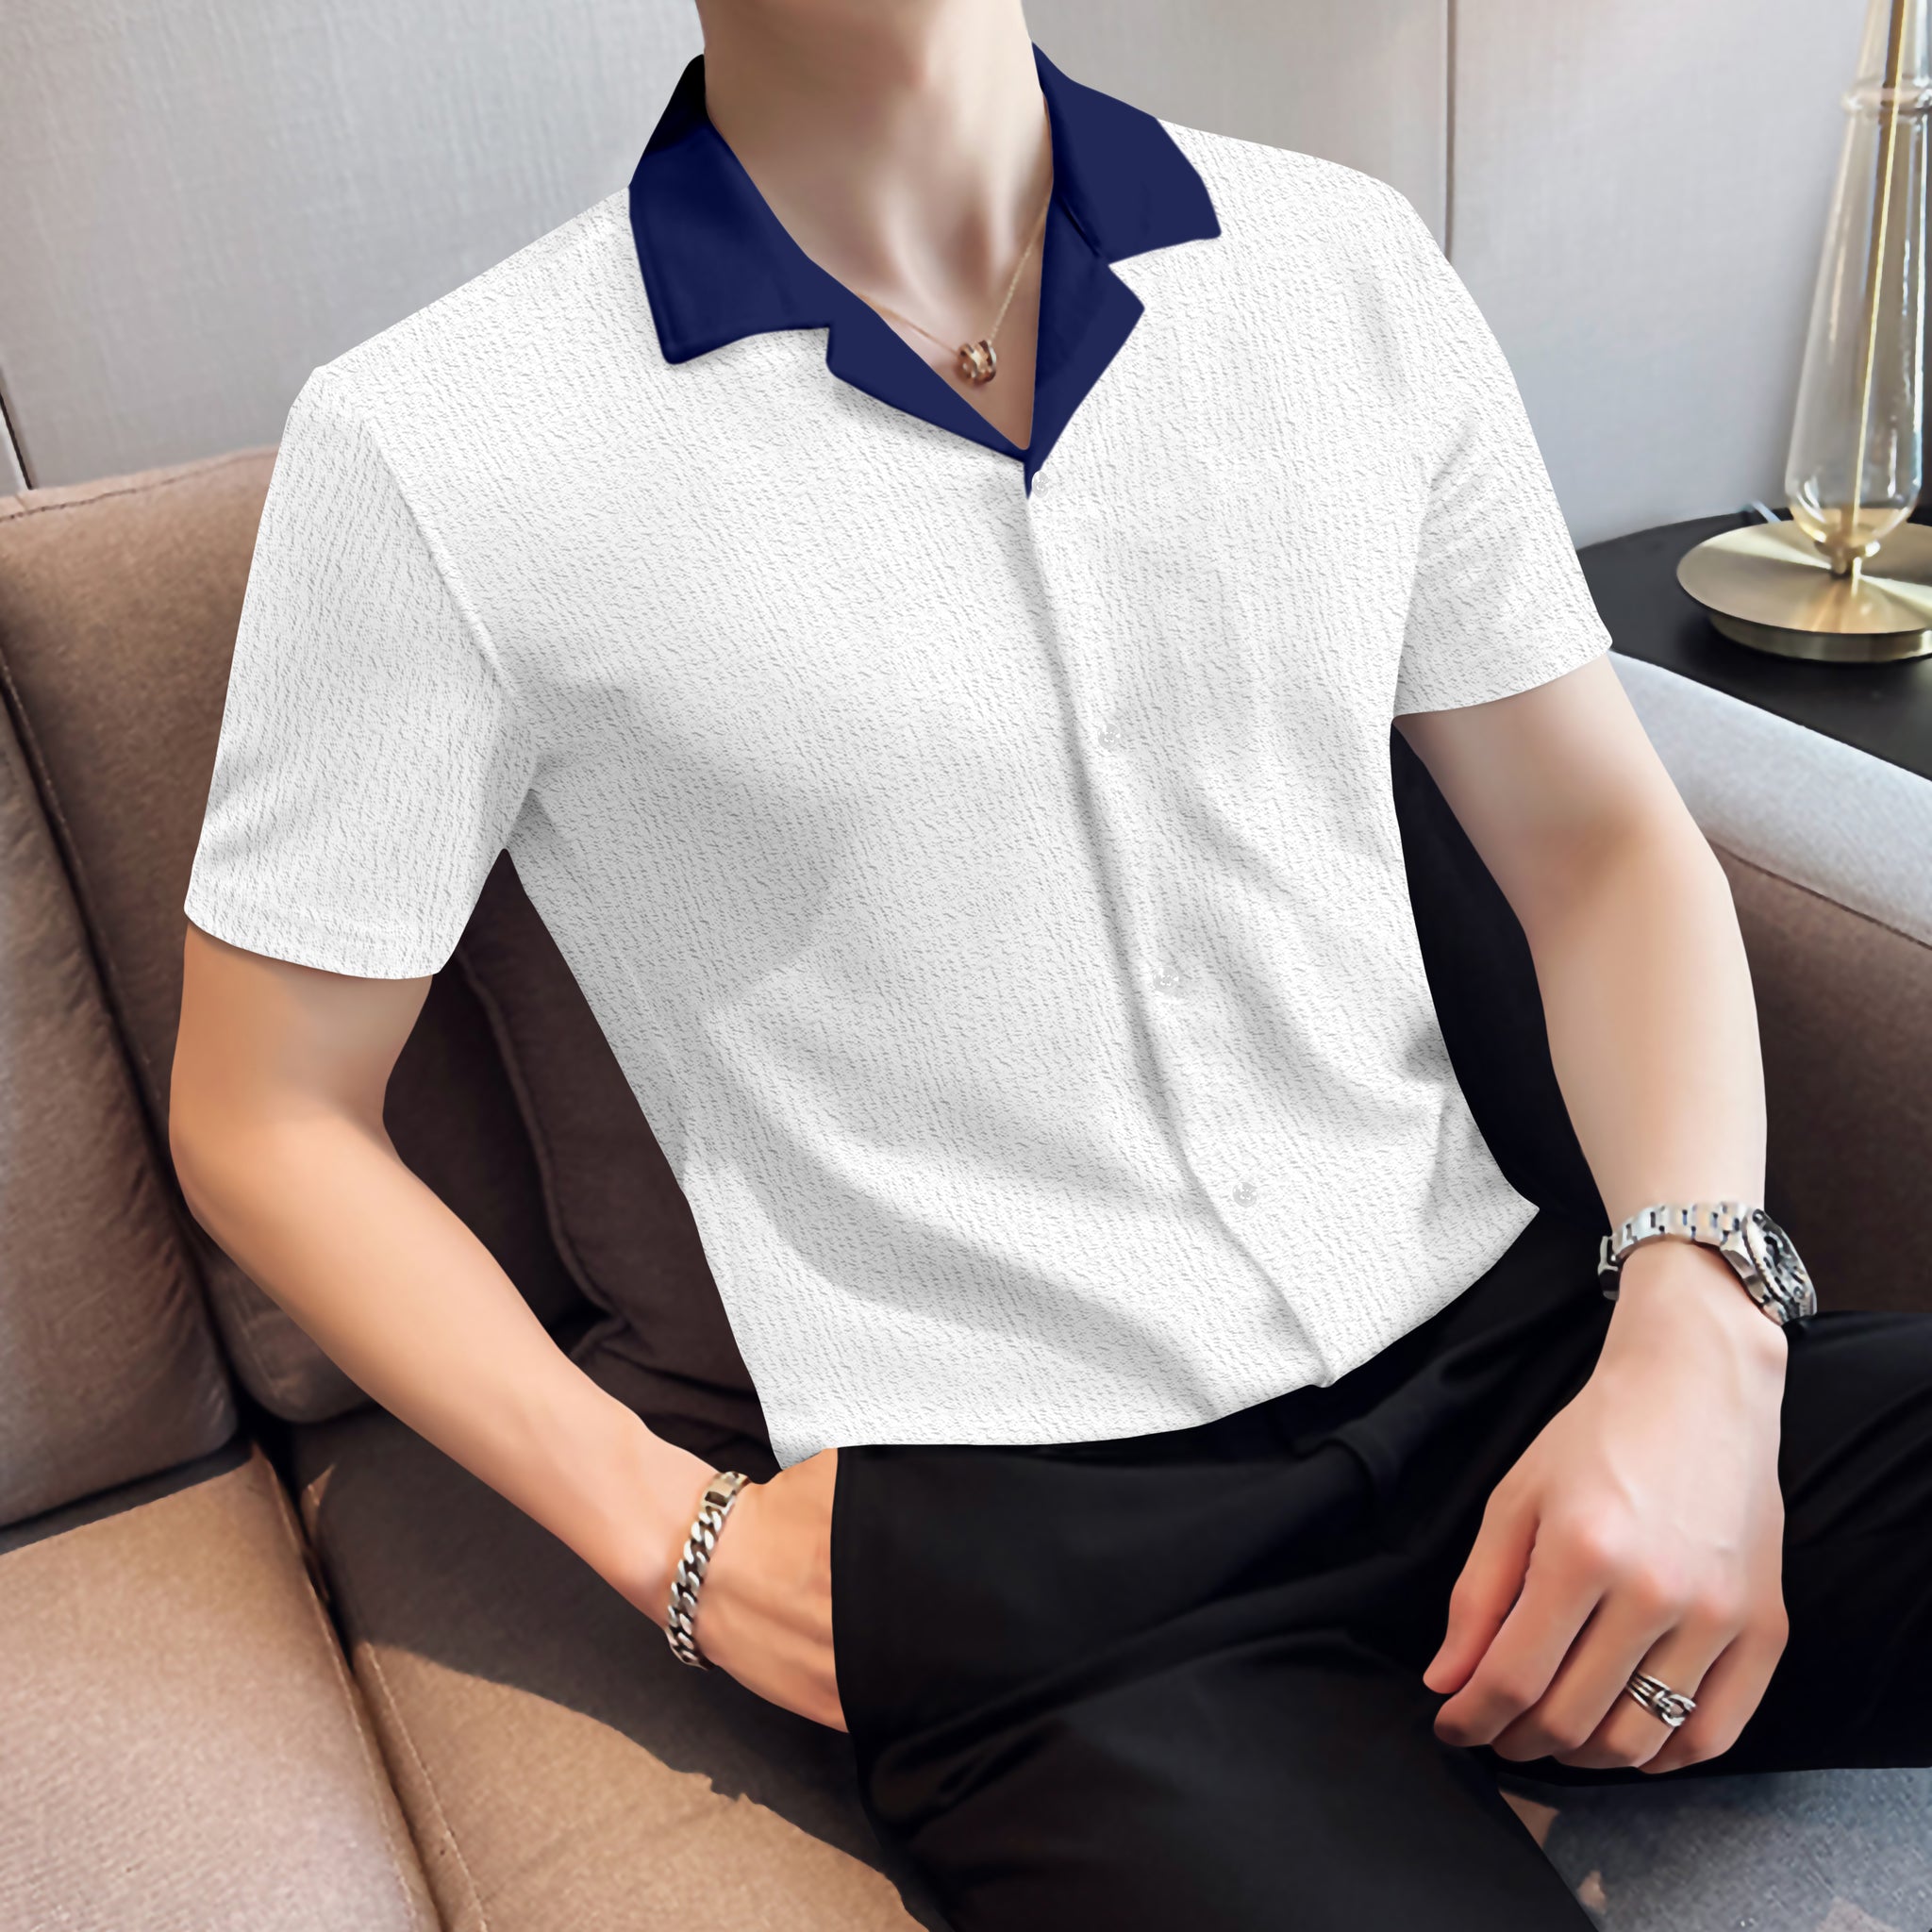 Premium White Shirt With Blue Revere Collar